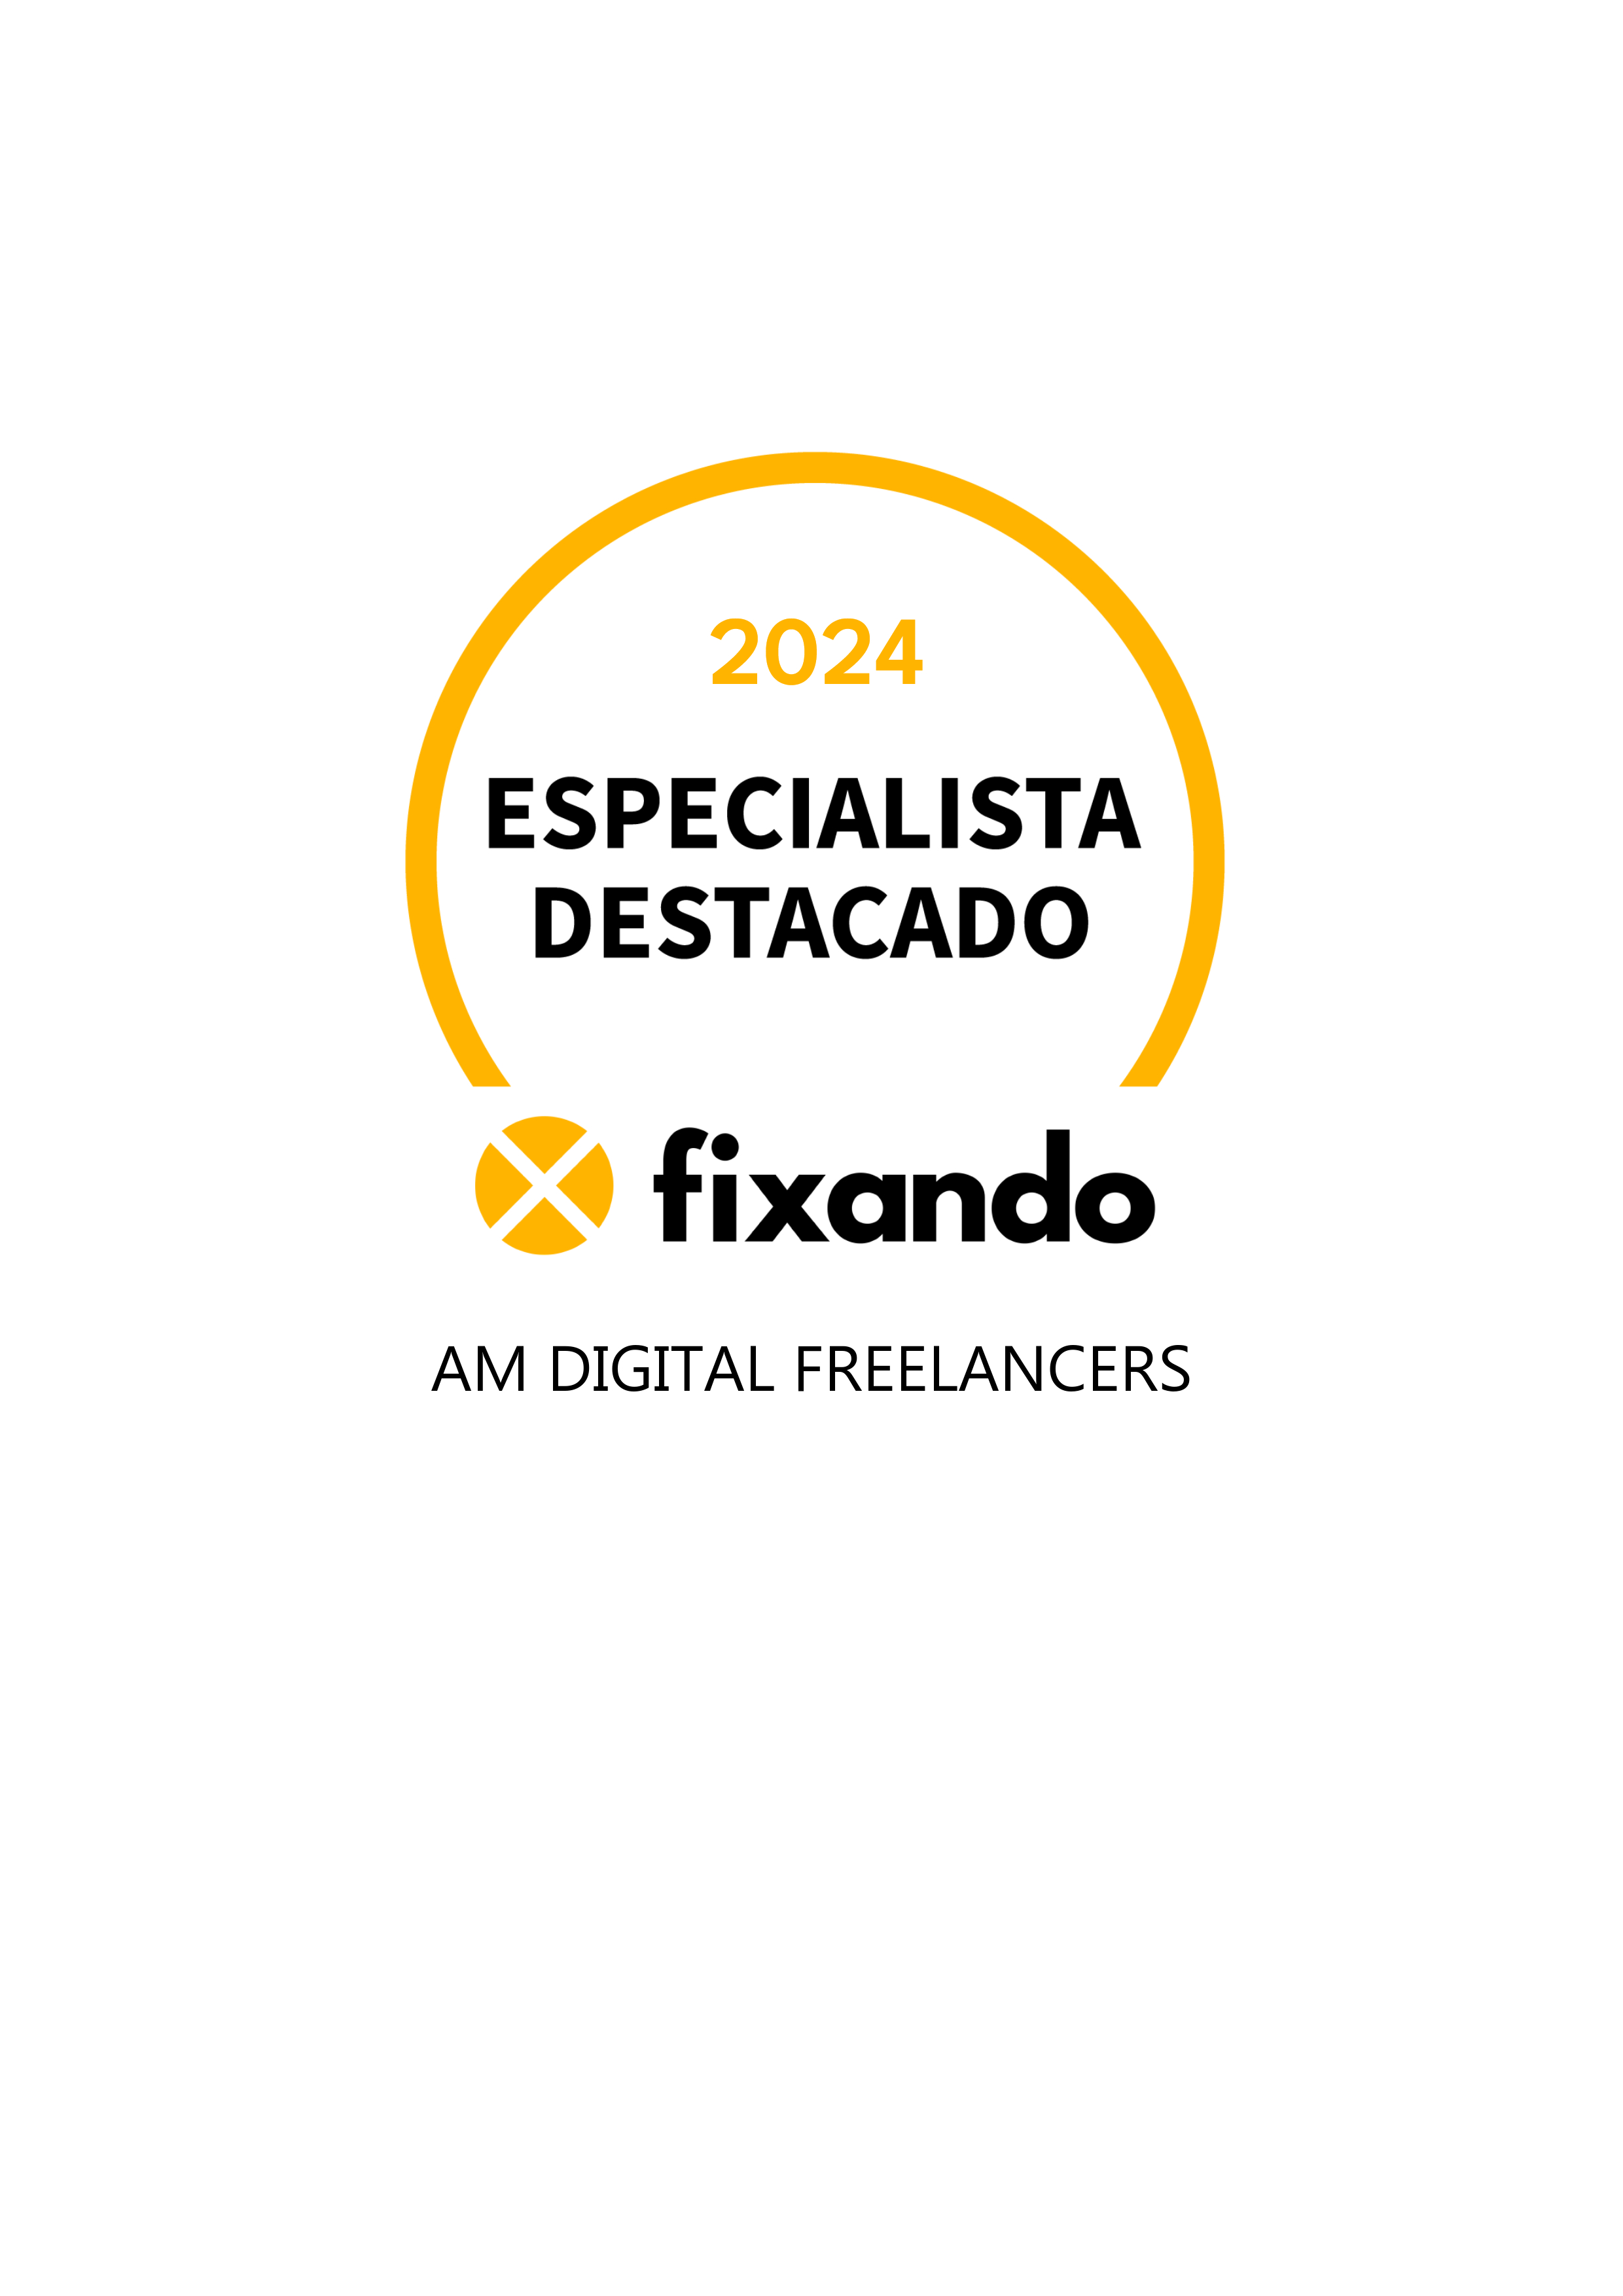 Am Digital Freelancers - Guimarães - Marketing